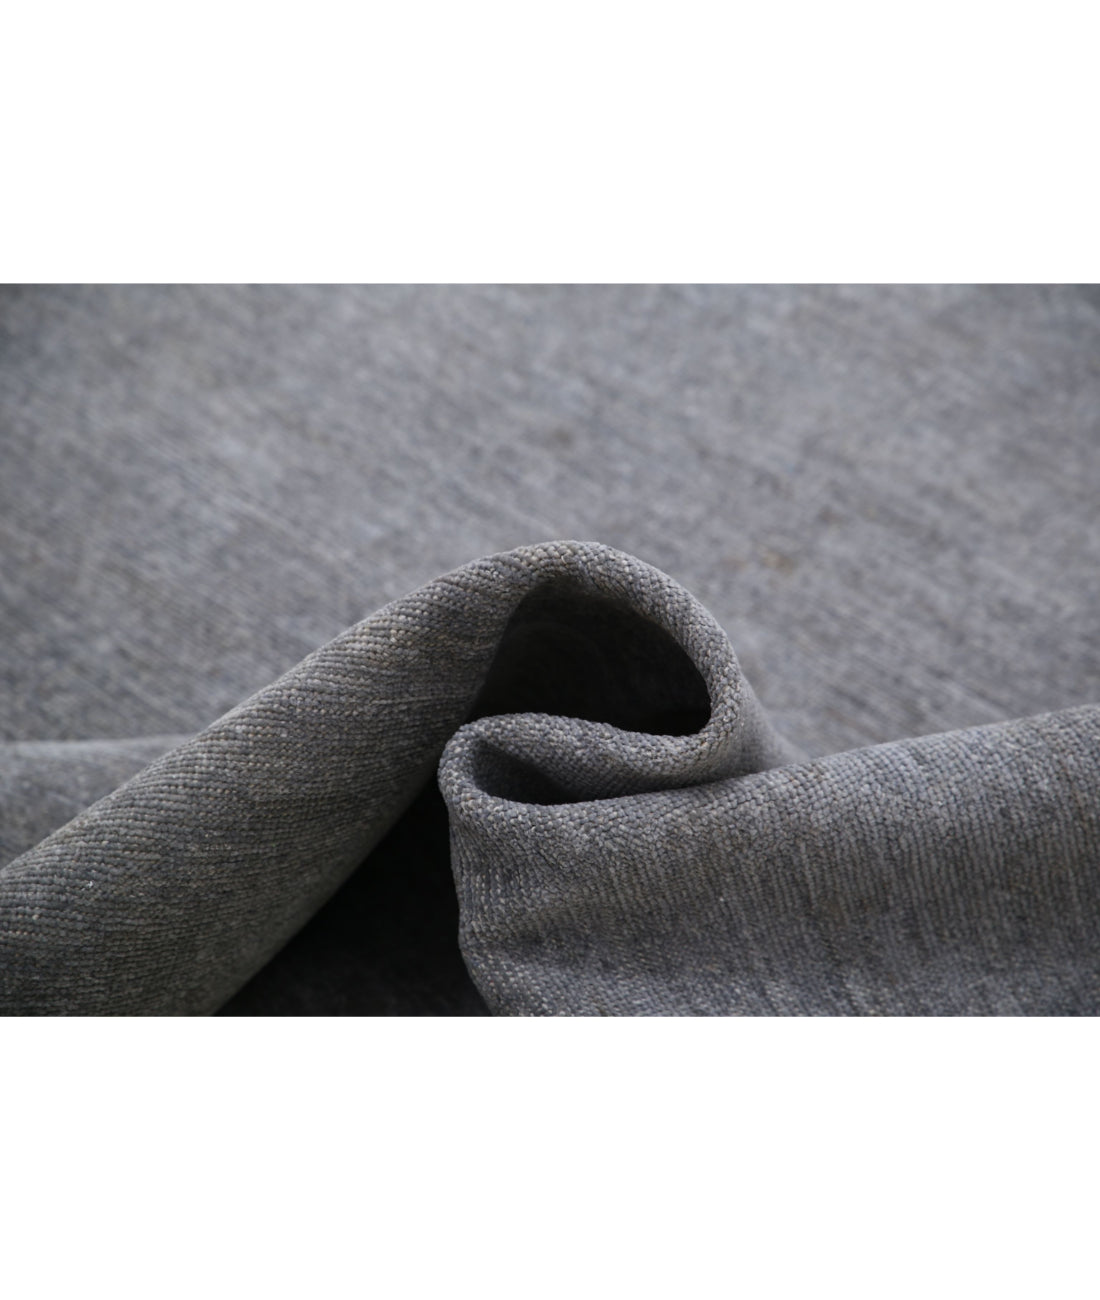 Hand Knotted Overdye Wool Rug - 9'8'' x 13'9'' 9'8'' x 13'9'' (290 X 413) / Grey / Grey